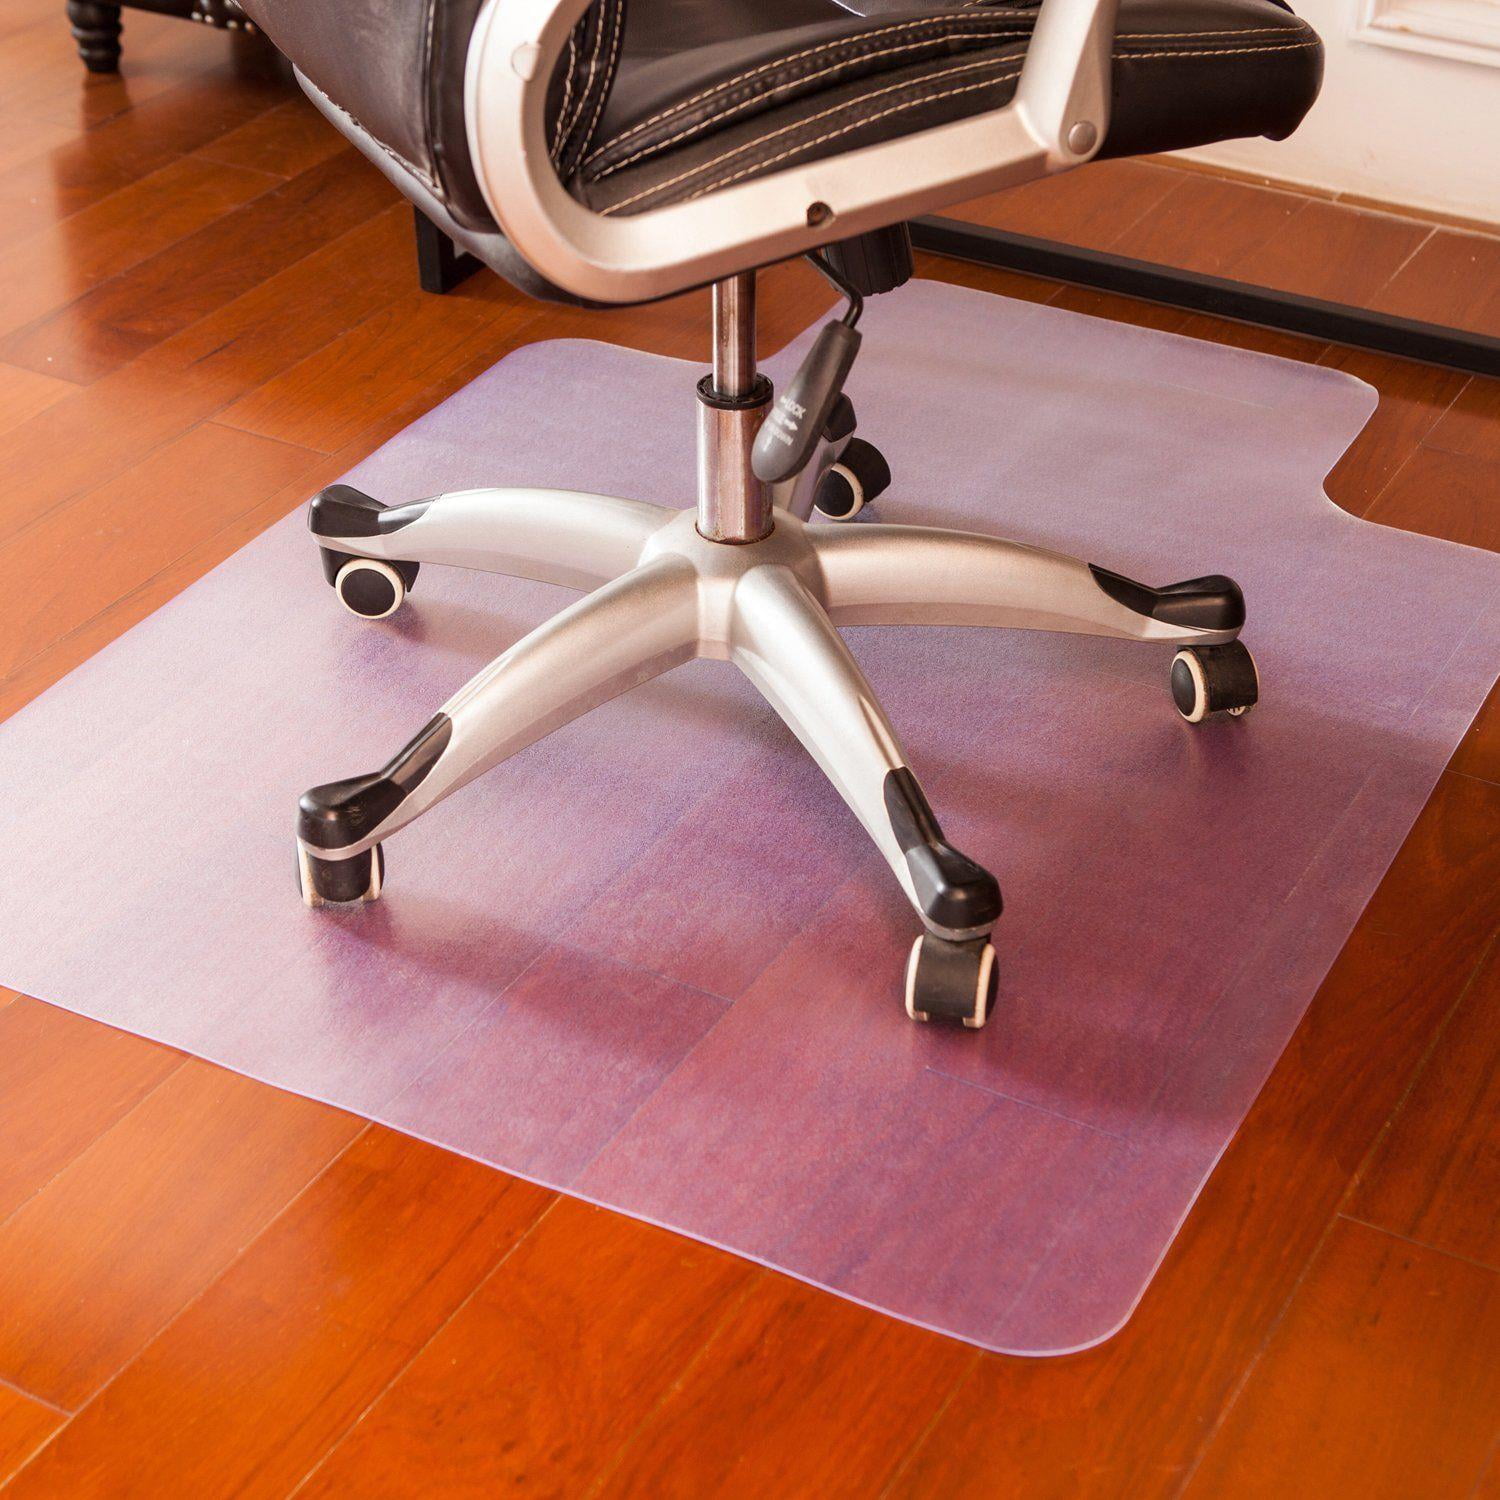 Ktaxon PVC Matte Desk Office Chair Mat Protector for Hard Wood Floors 48